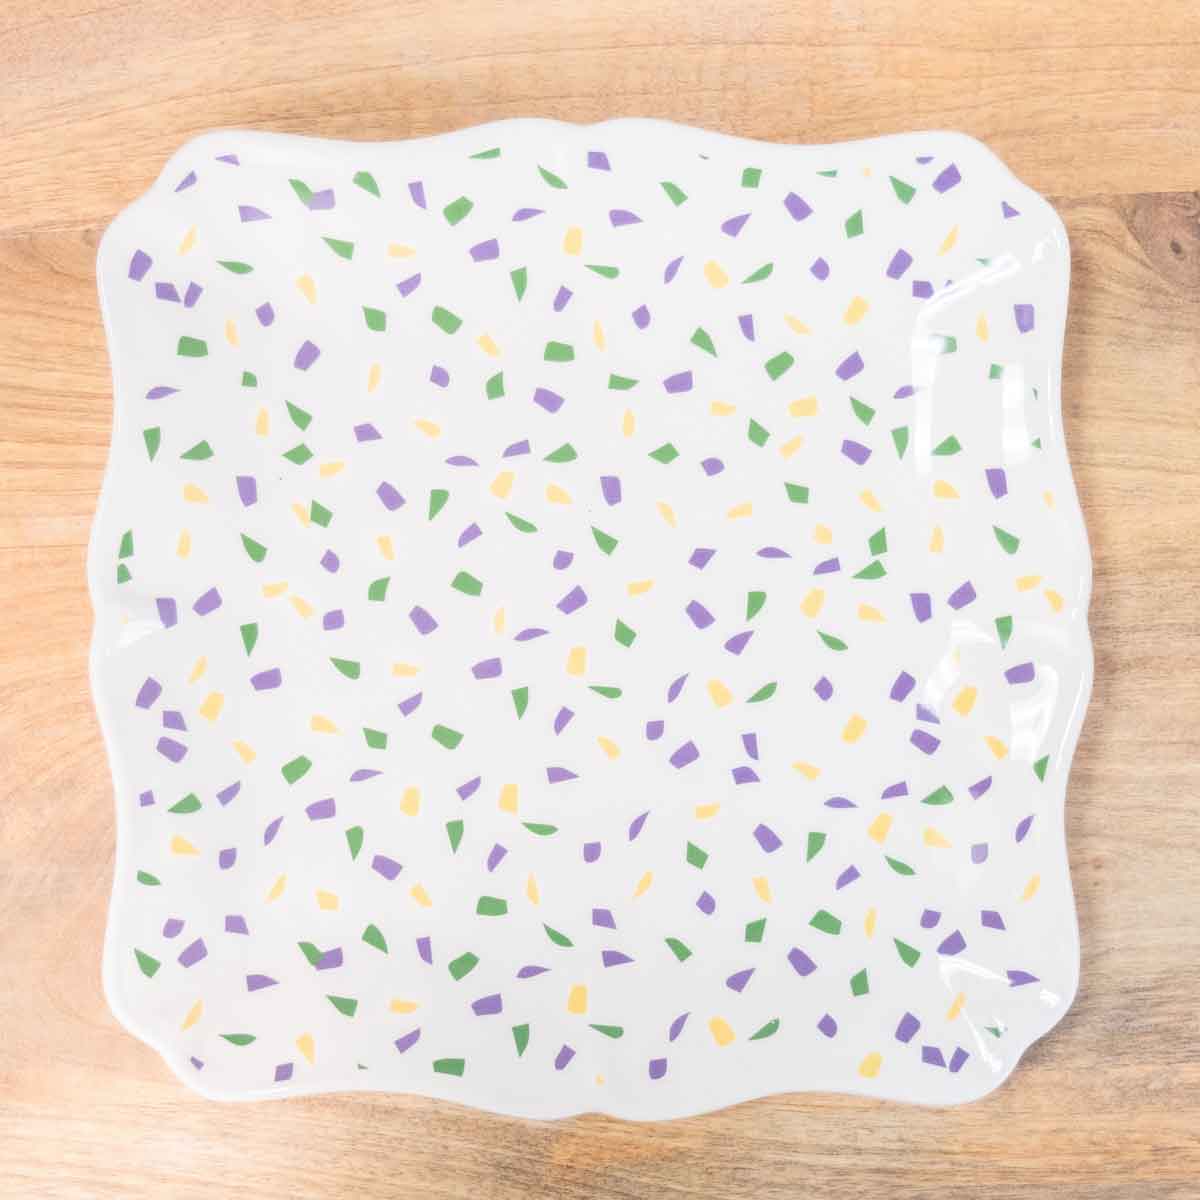 The Royal Standard Platter: White, Purple, Green, & White Confetti